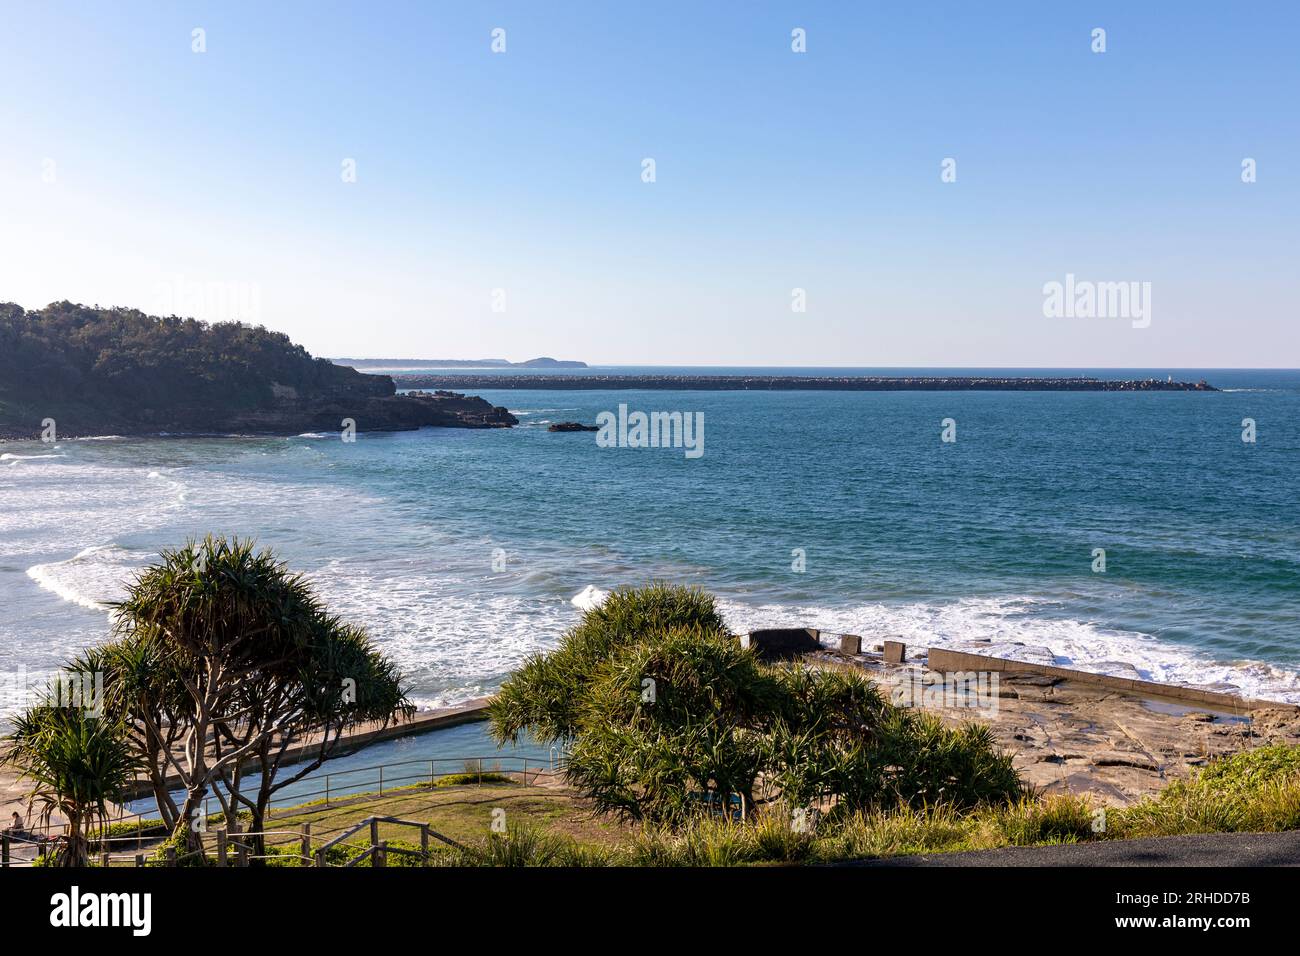 Yamba ocean pool beside main beach, Yamba is a coastal town in Northern New South Wales,Australia Stock Photo